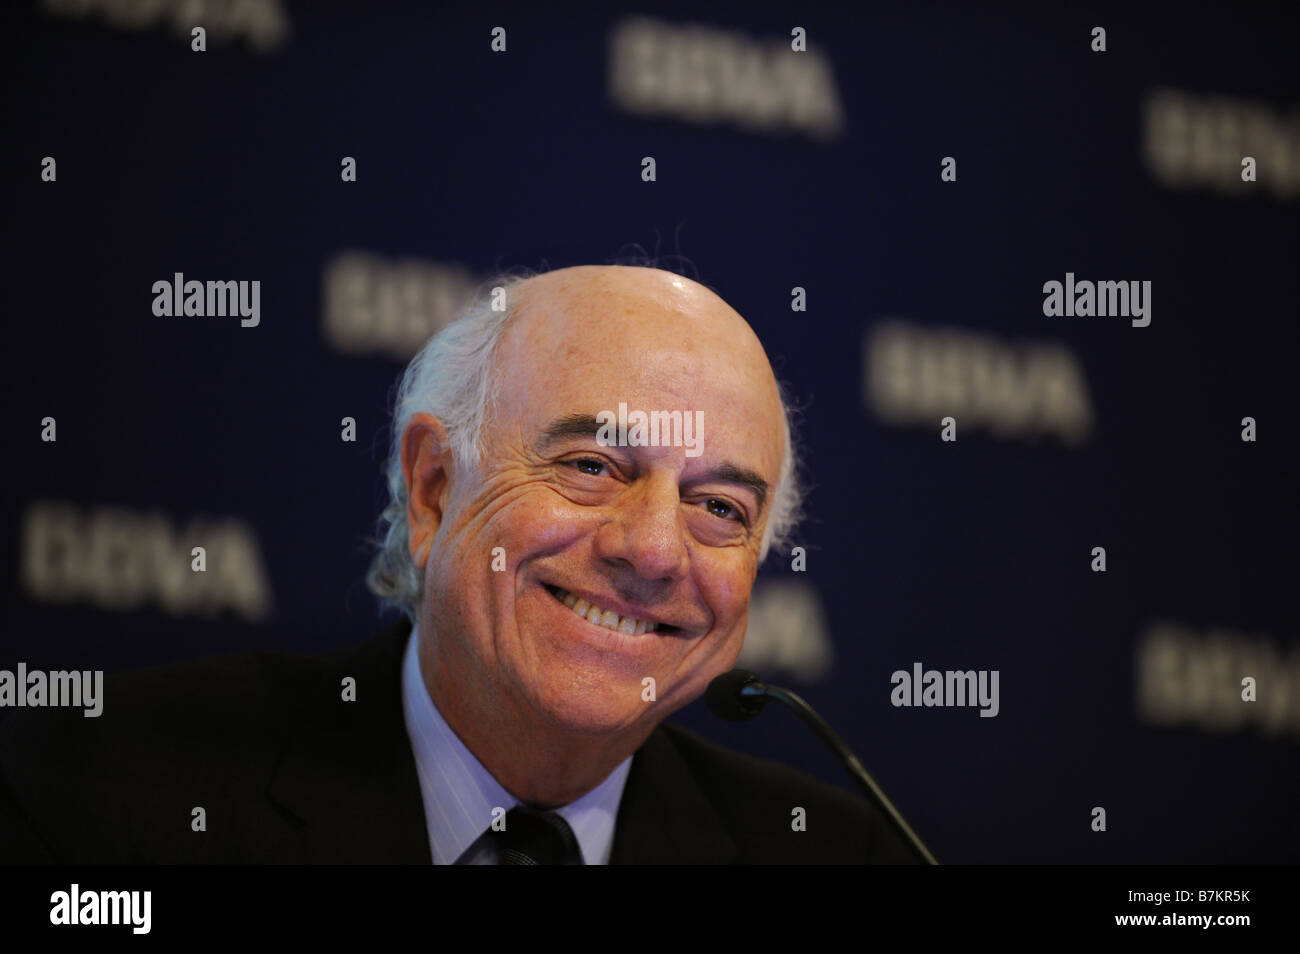 Francisco González presidente del Banco Bilbao Vizcaya Argentaria Sa nel corso di una conferenza stampa a Madrid Spagna Foto Stock